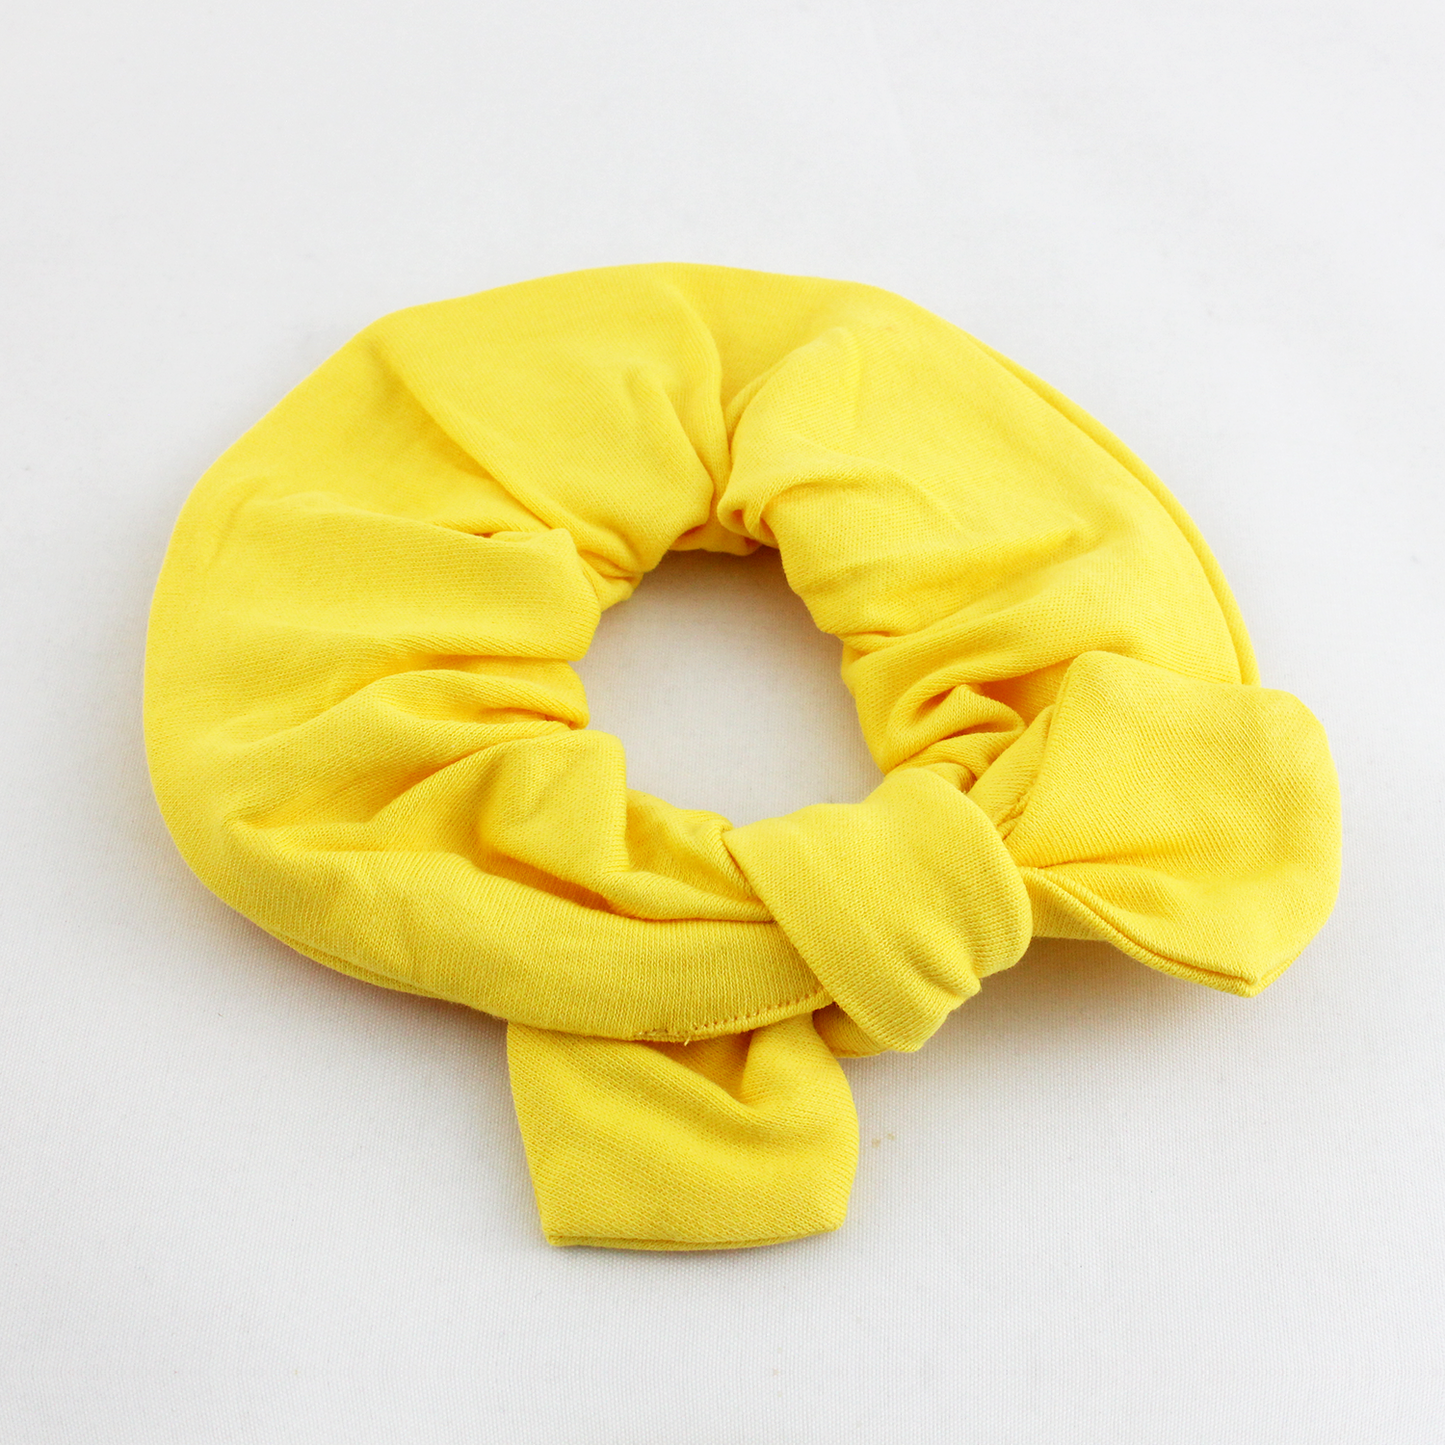 Endanzoo Organic Cotton Scrunchies for Mom - Yellow